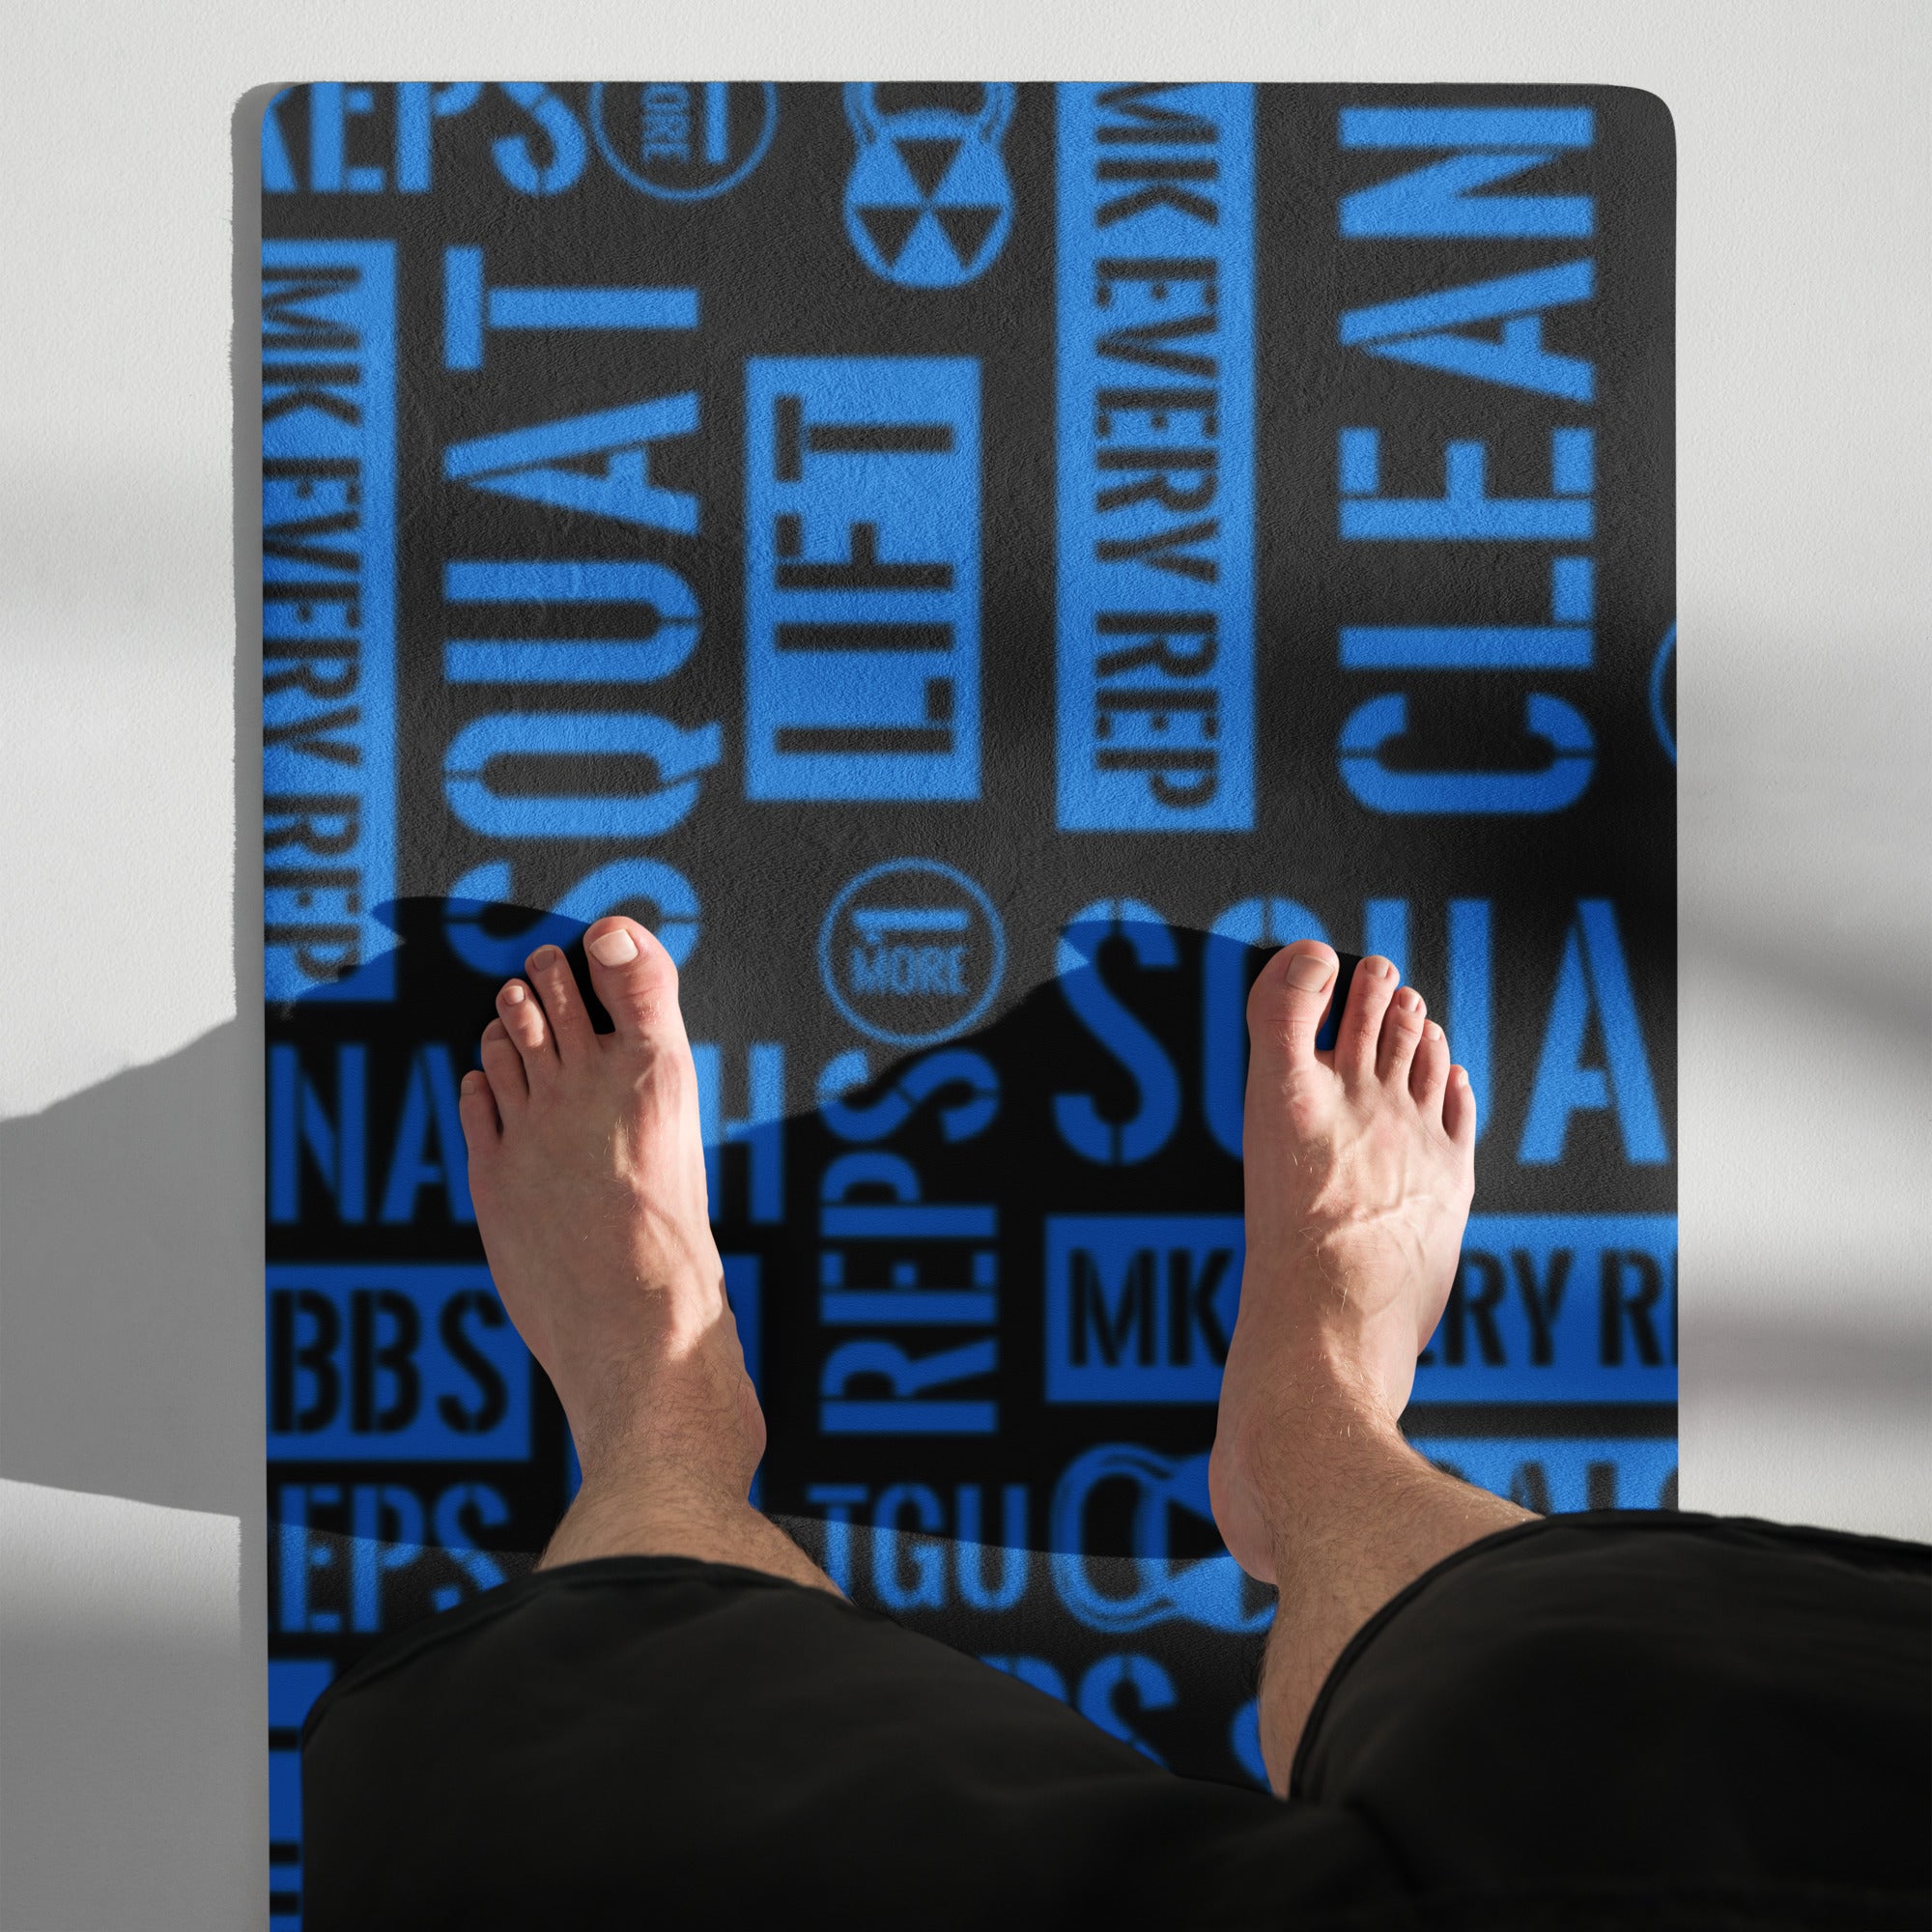 Black/Blue Acronyms Yoga mat